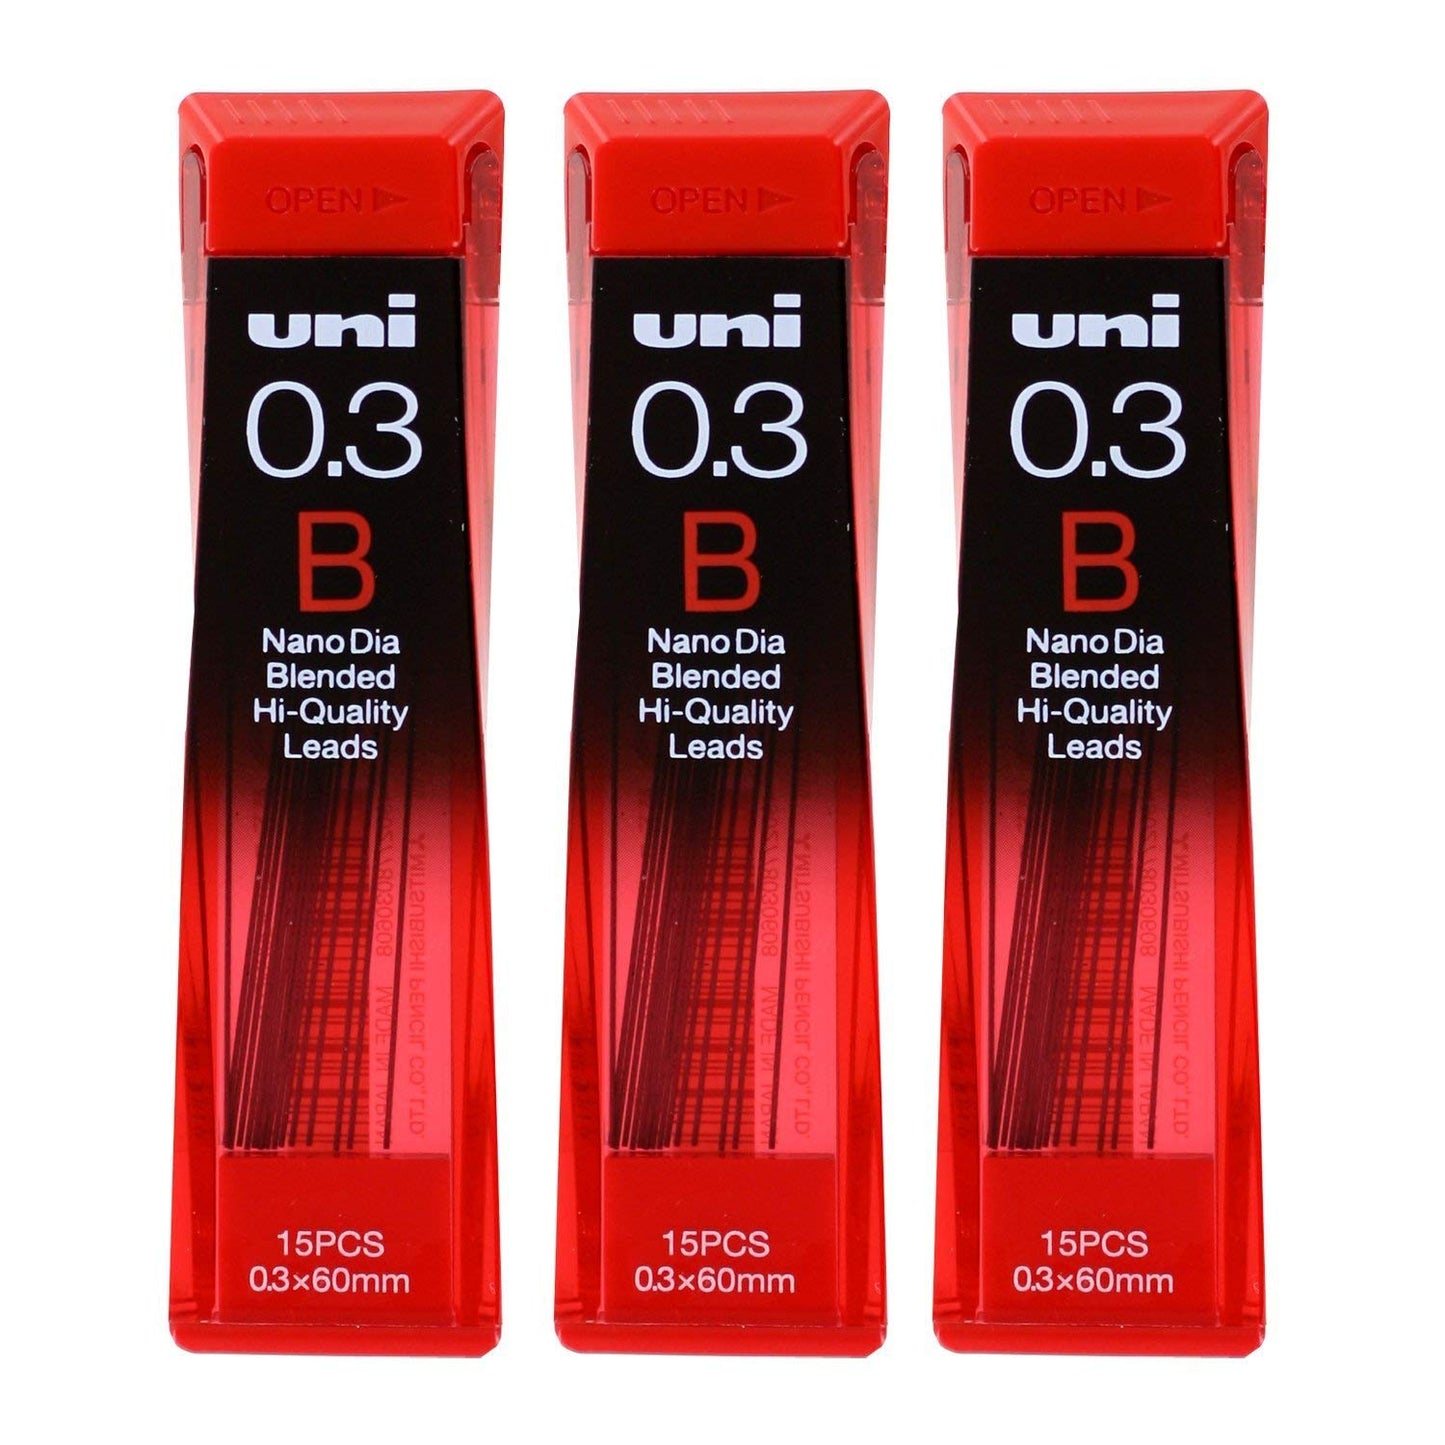 Uni Nano Dia 0.3mm B Refill Leads (Pack of 3)